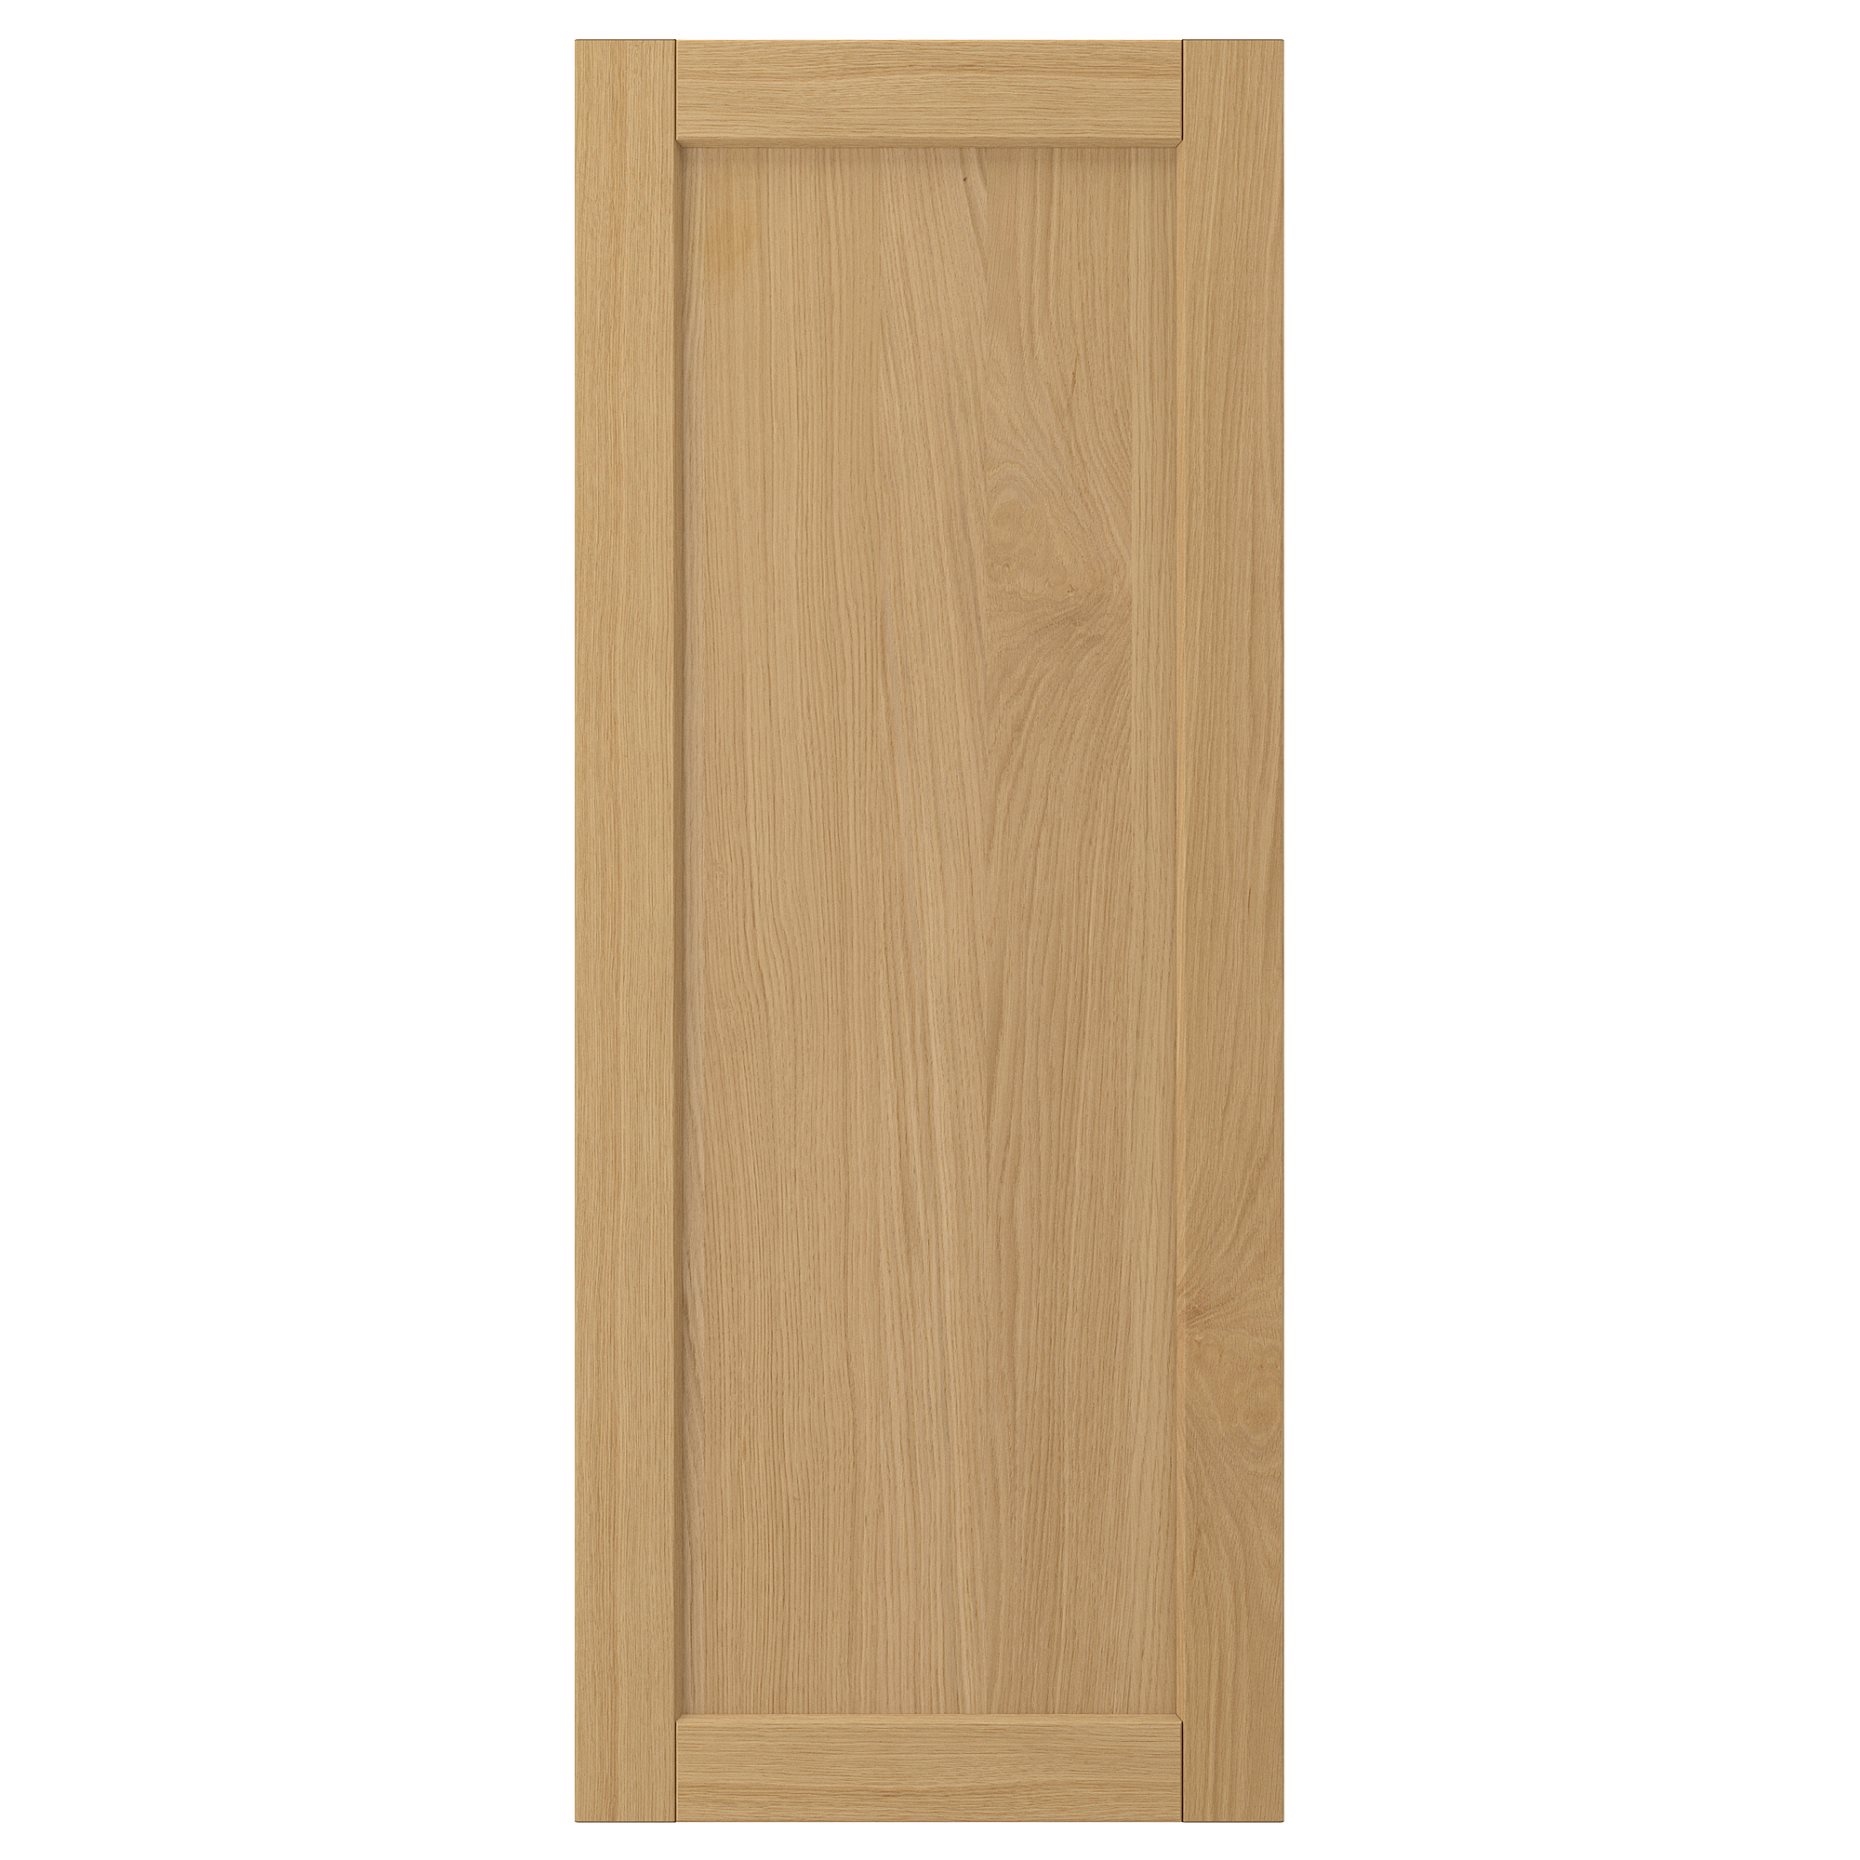 FORSBACKA, πόρτα, 40x100 cm, 205.652.29